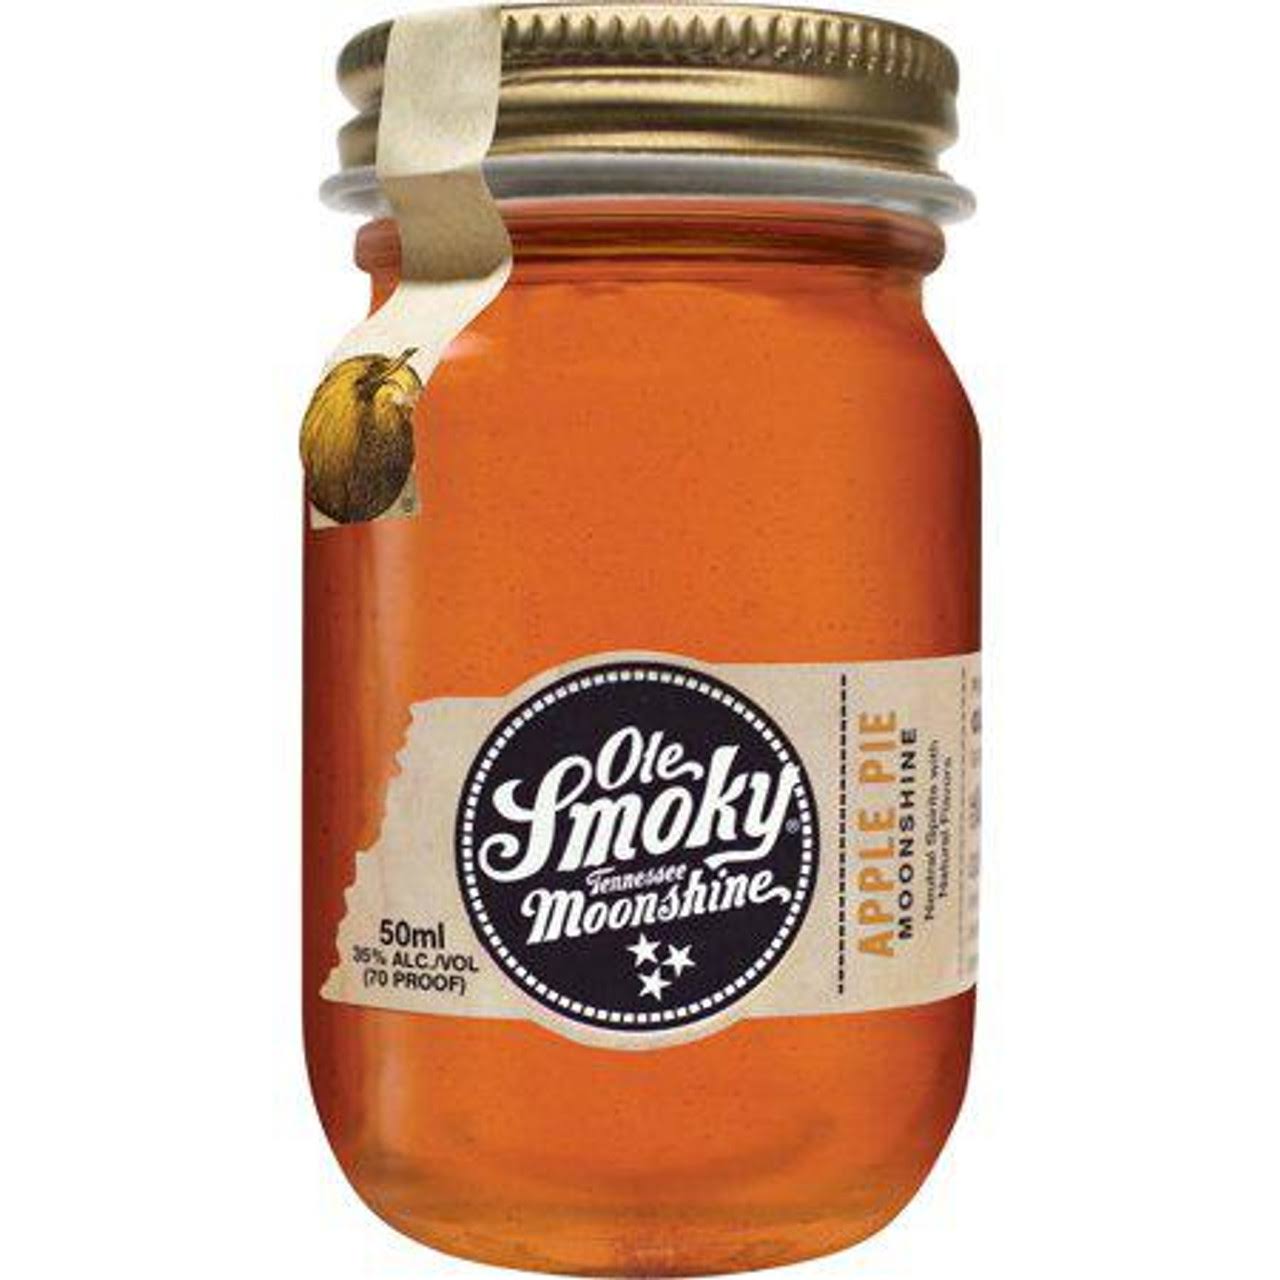 Ole Smoky Moonshine, Tennessee, Apple Pie - 50 ml